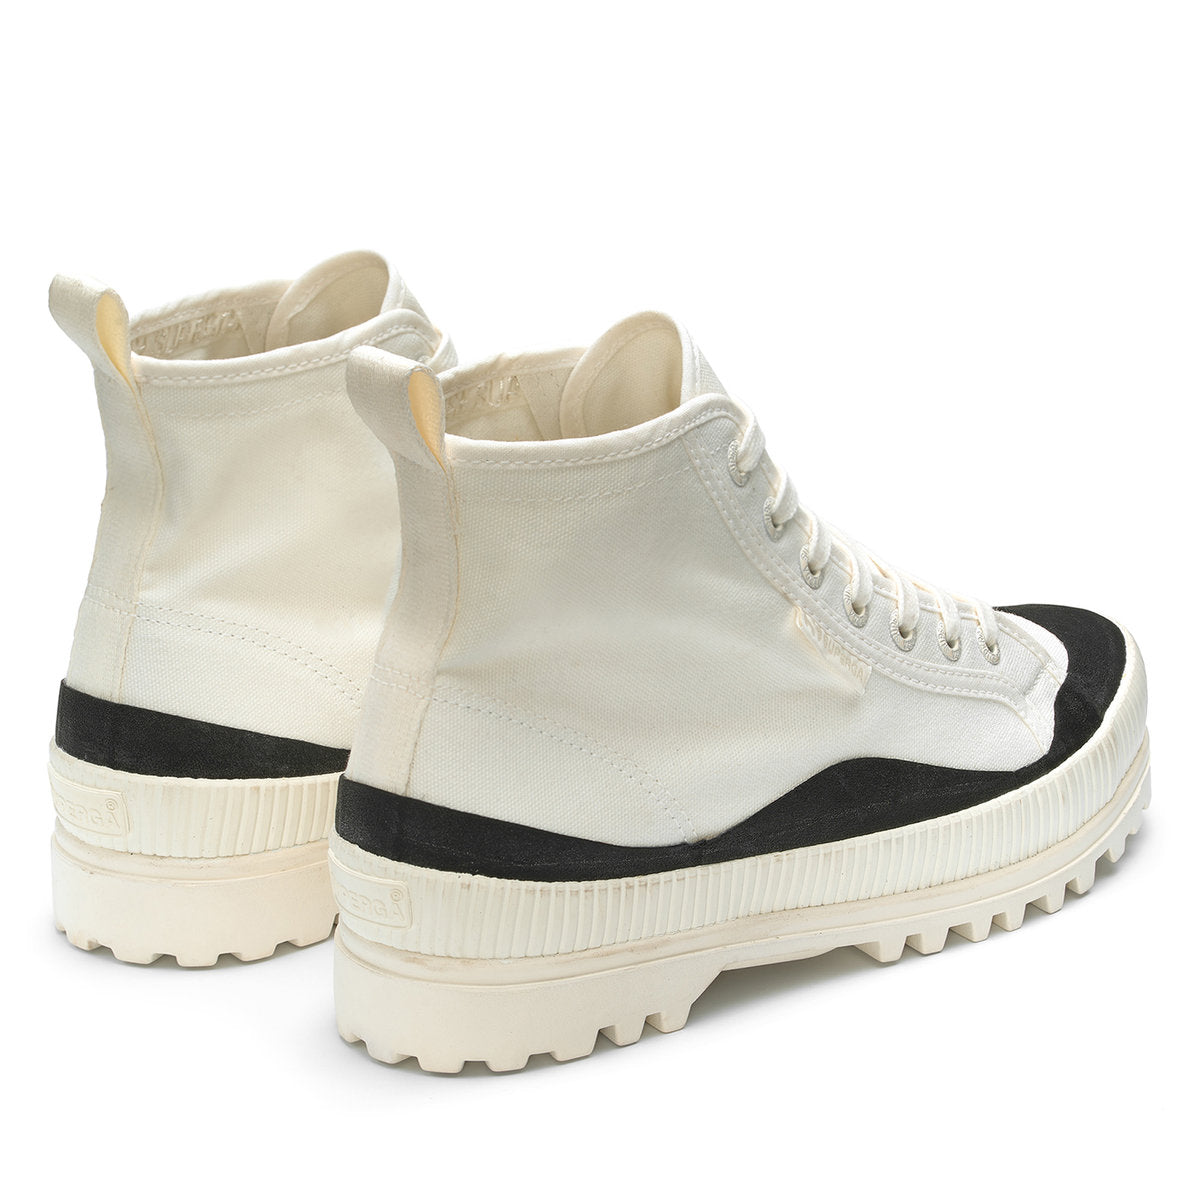 Superga Women's 2469 Platform Boot Sneakers White Avorio Black